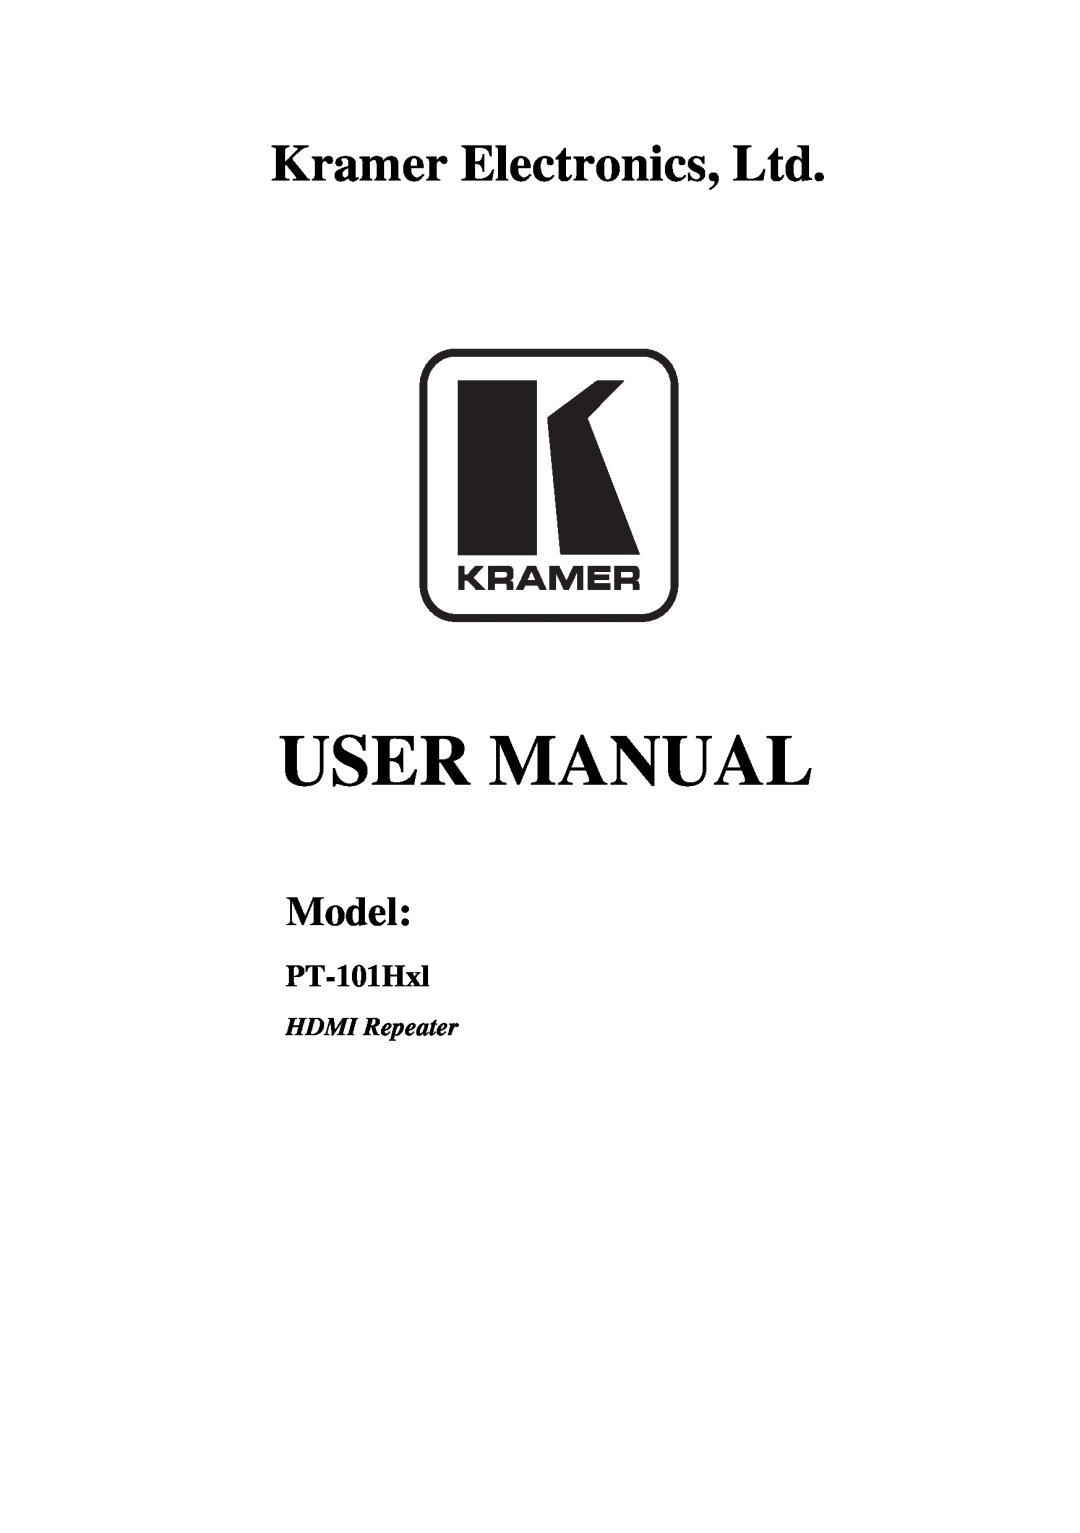 Kramer Electronics PT-101Hxl user manual User Manual, Model, HDMI Repeater 